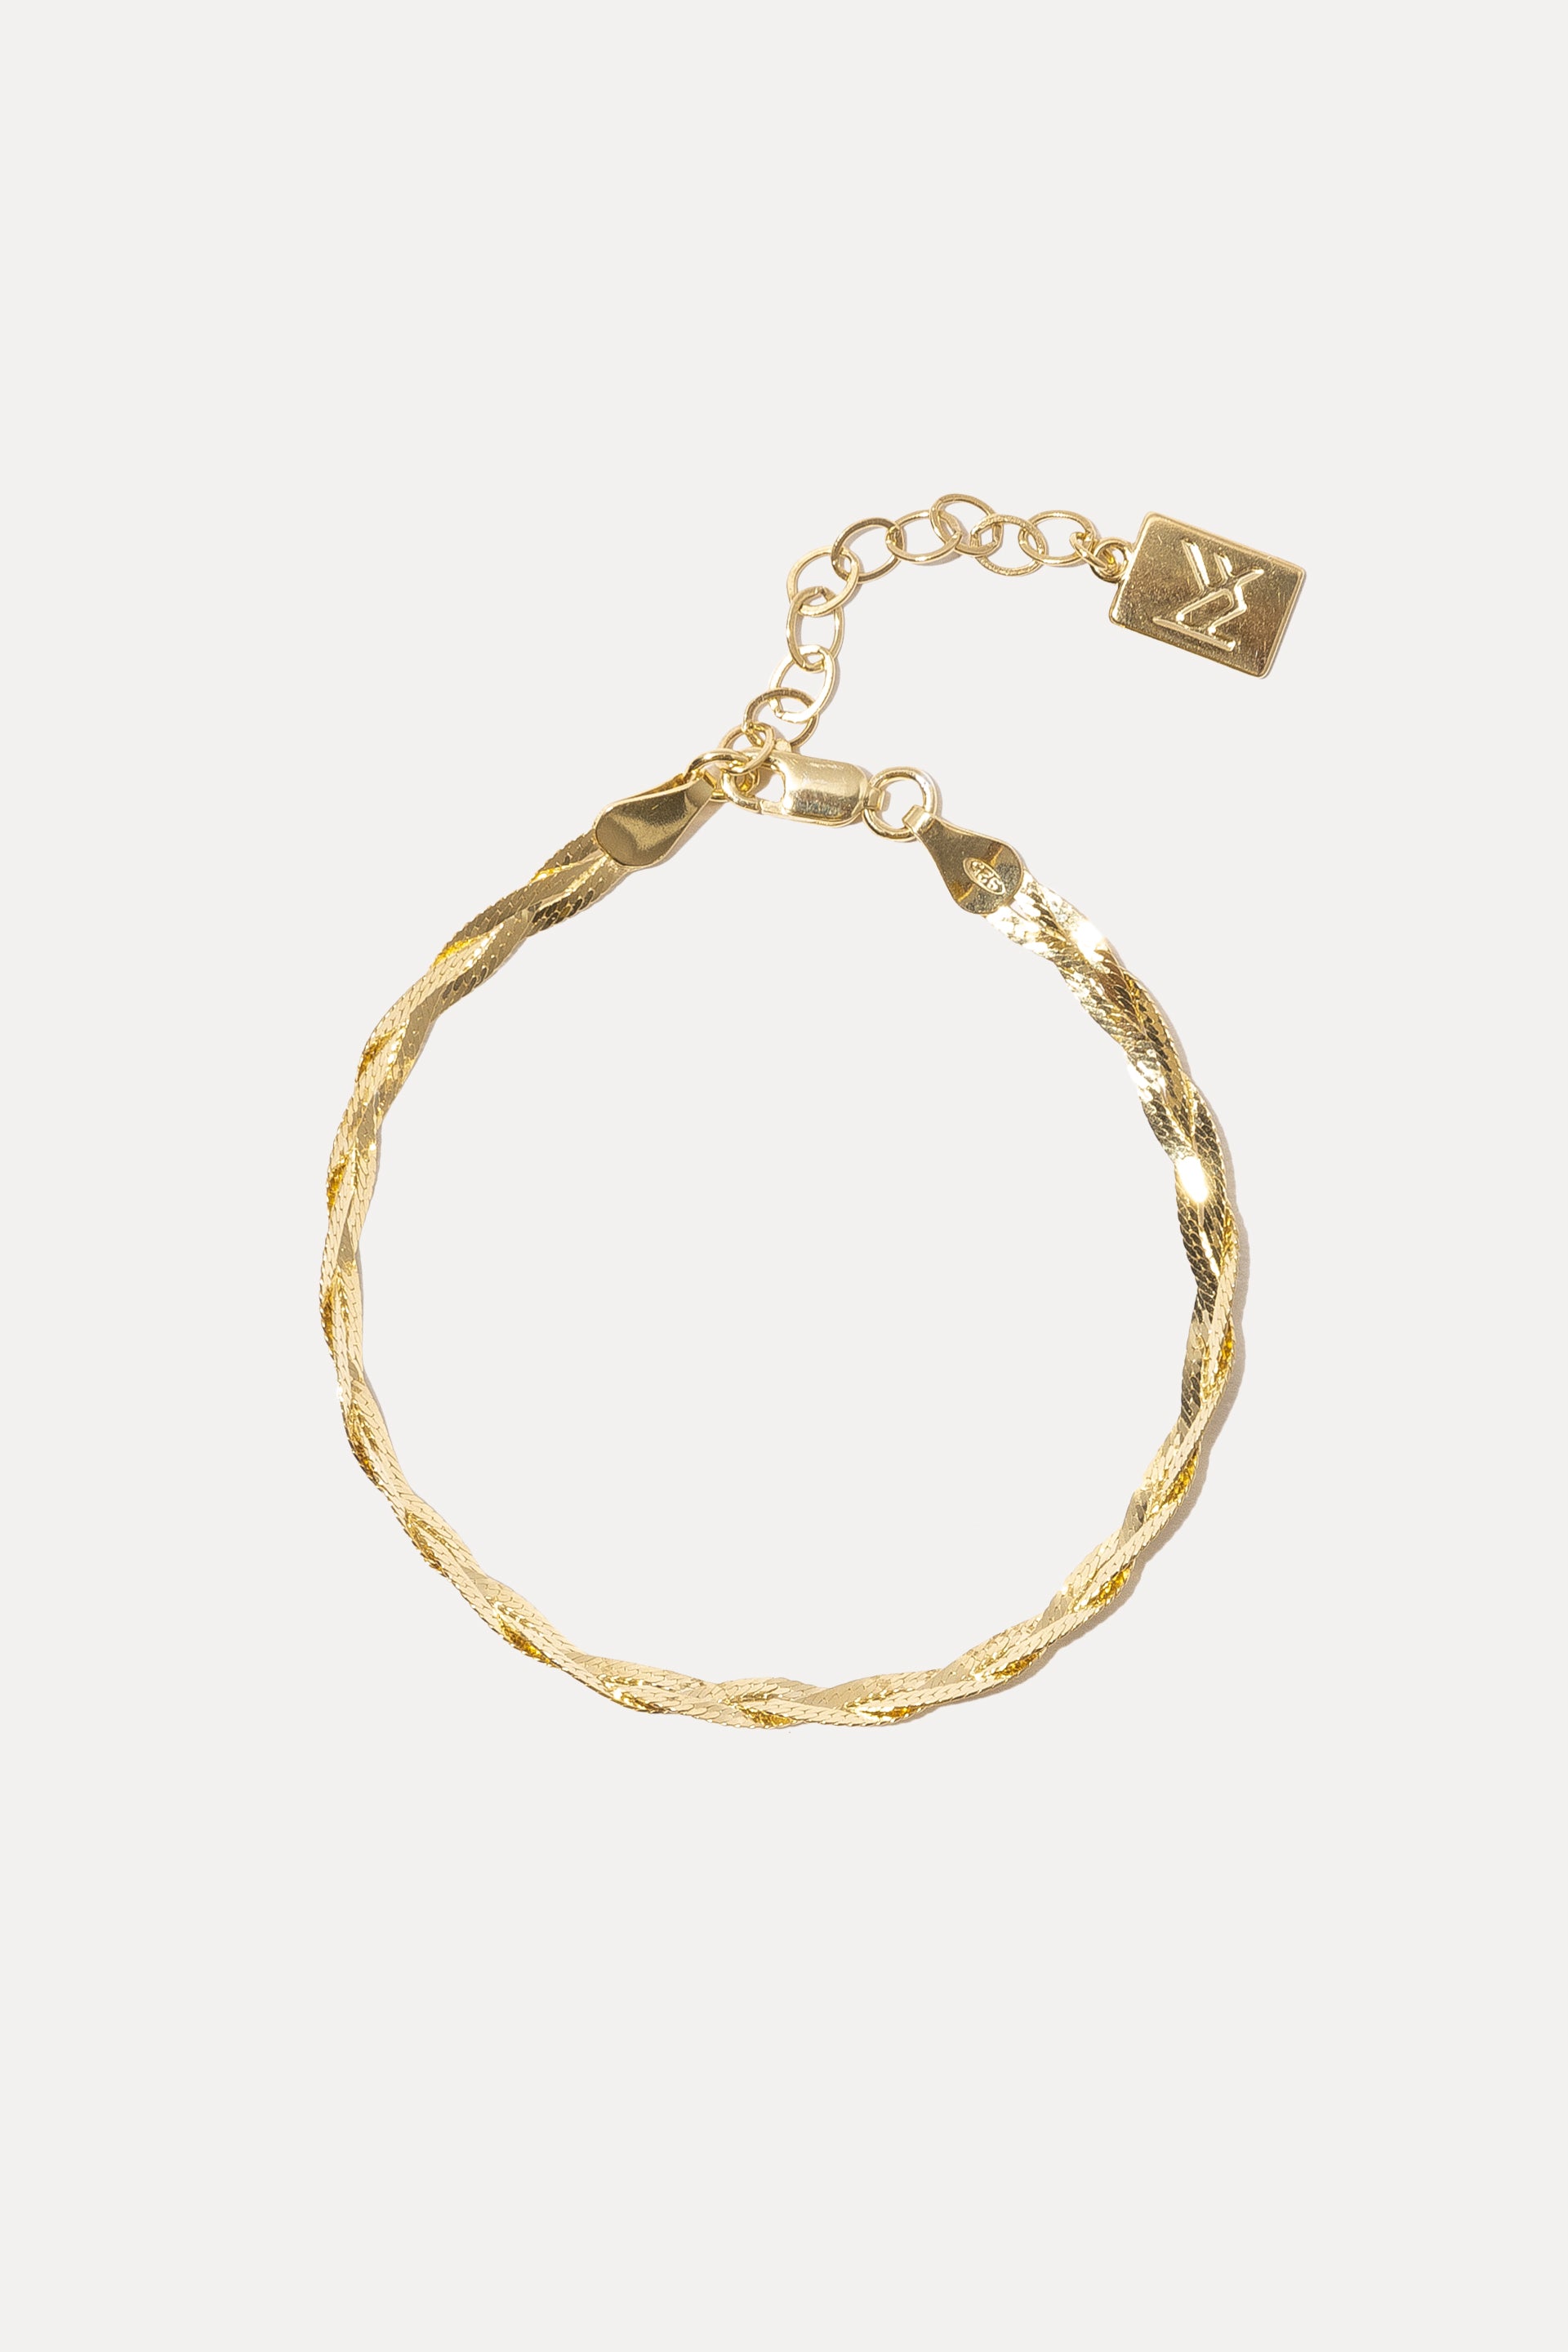 LOUIS VUITTON Logomania Bracelet Silver Gold | FASHIONPHILE